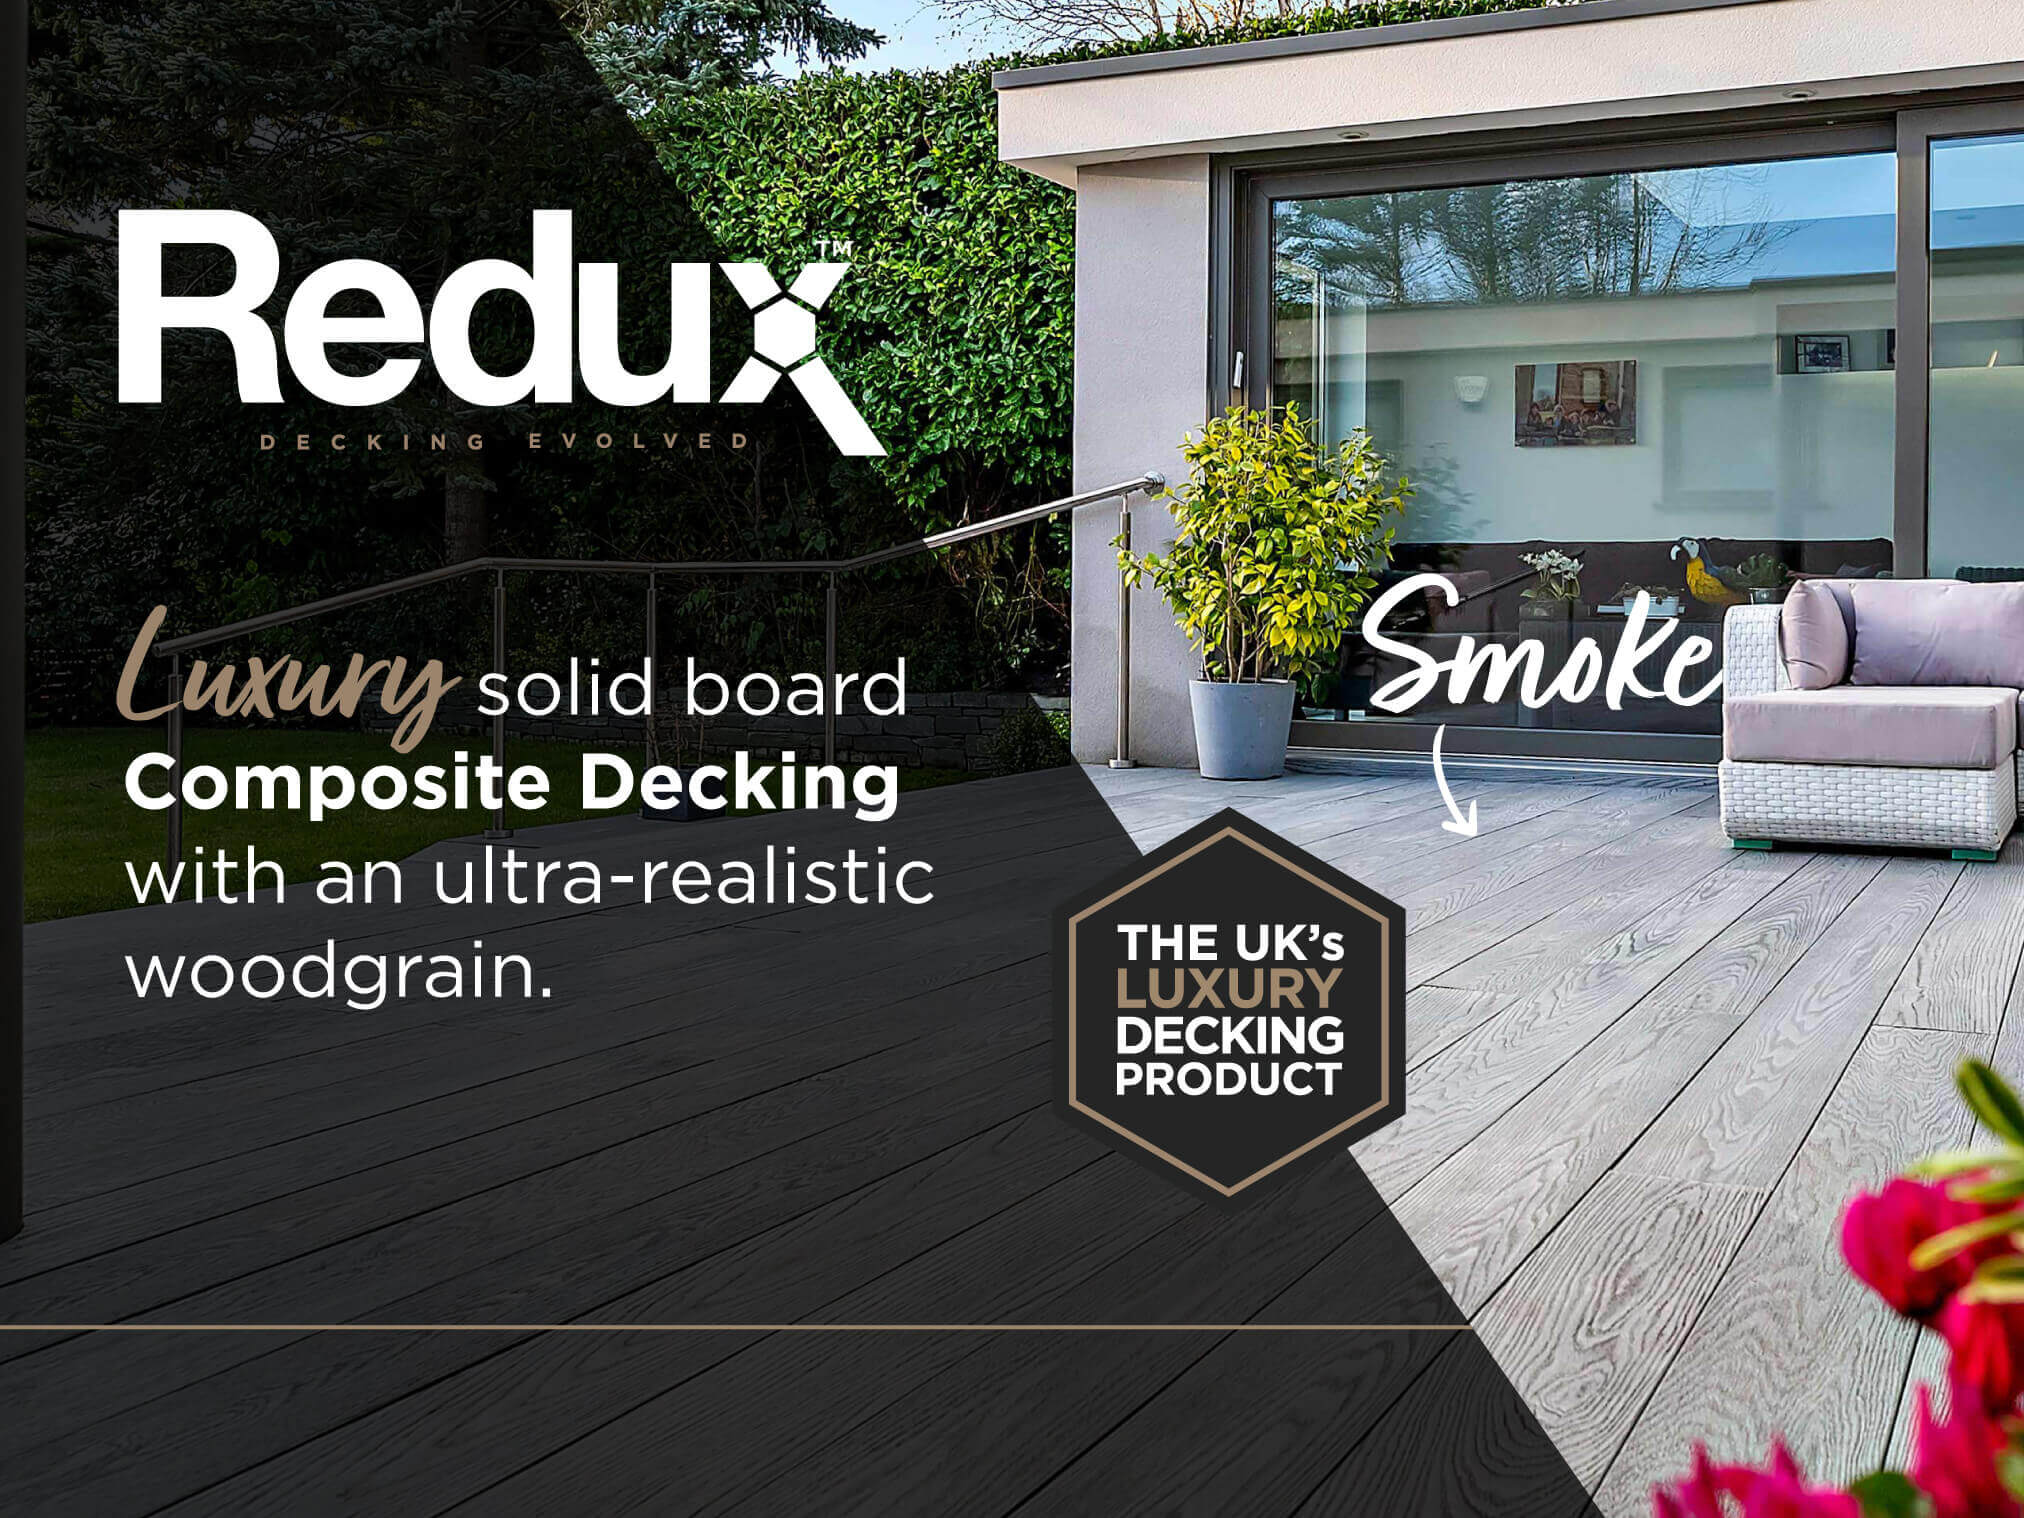 Redux Luxury Decking in Smoke